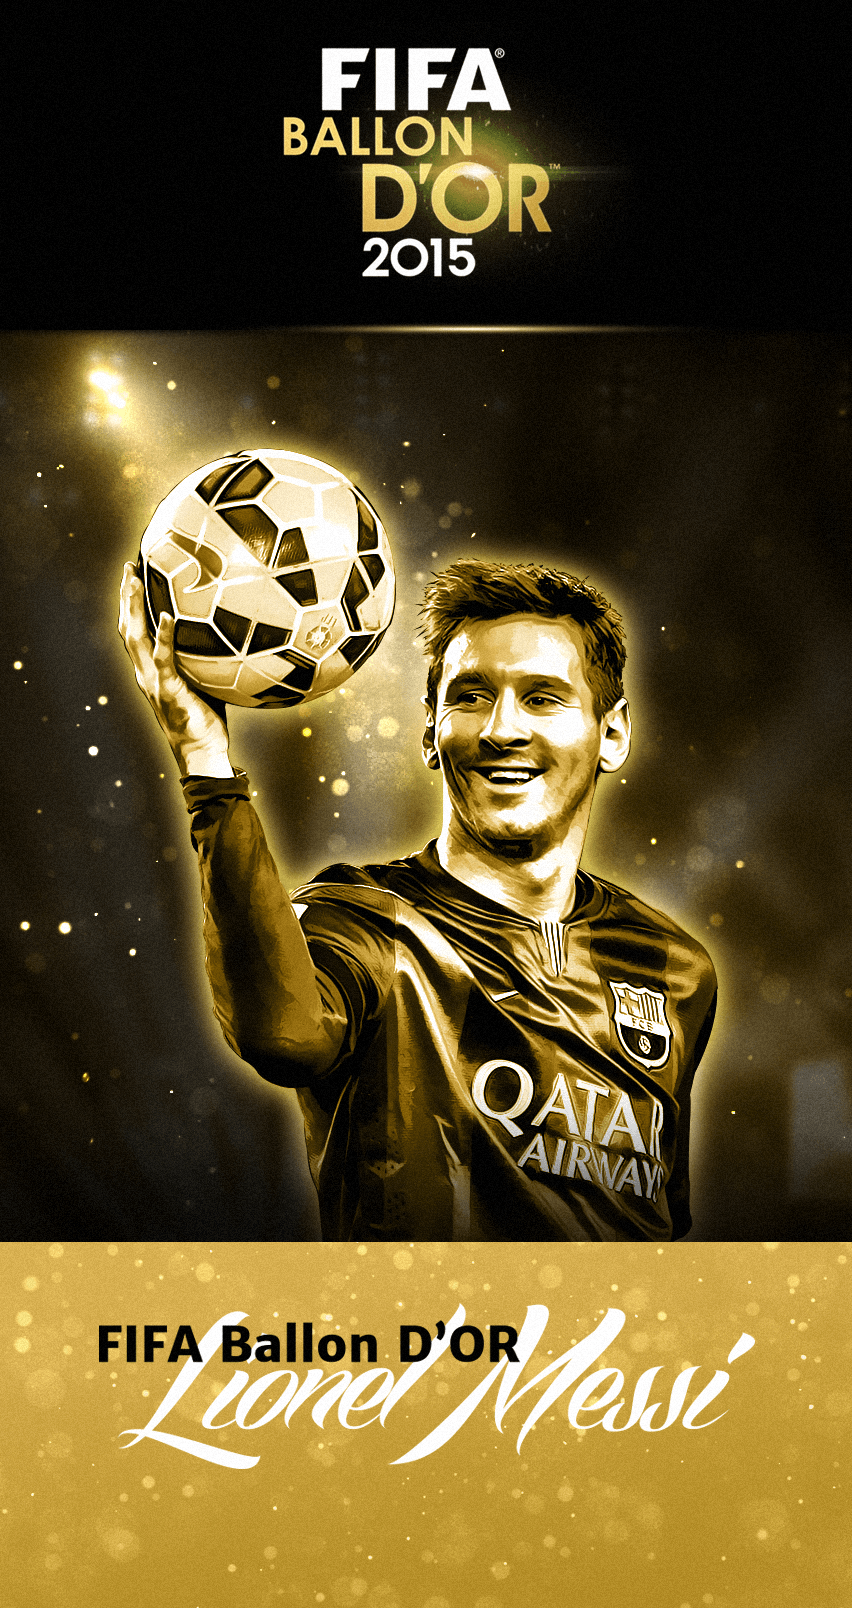 GrafiCrack Ballon D'OR Lionel Messi. Wallpaper